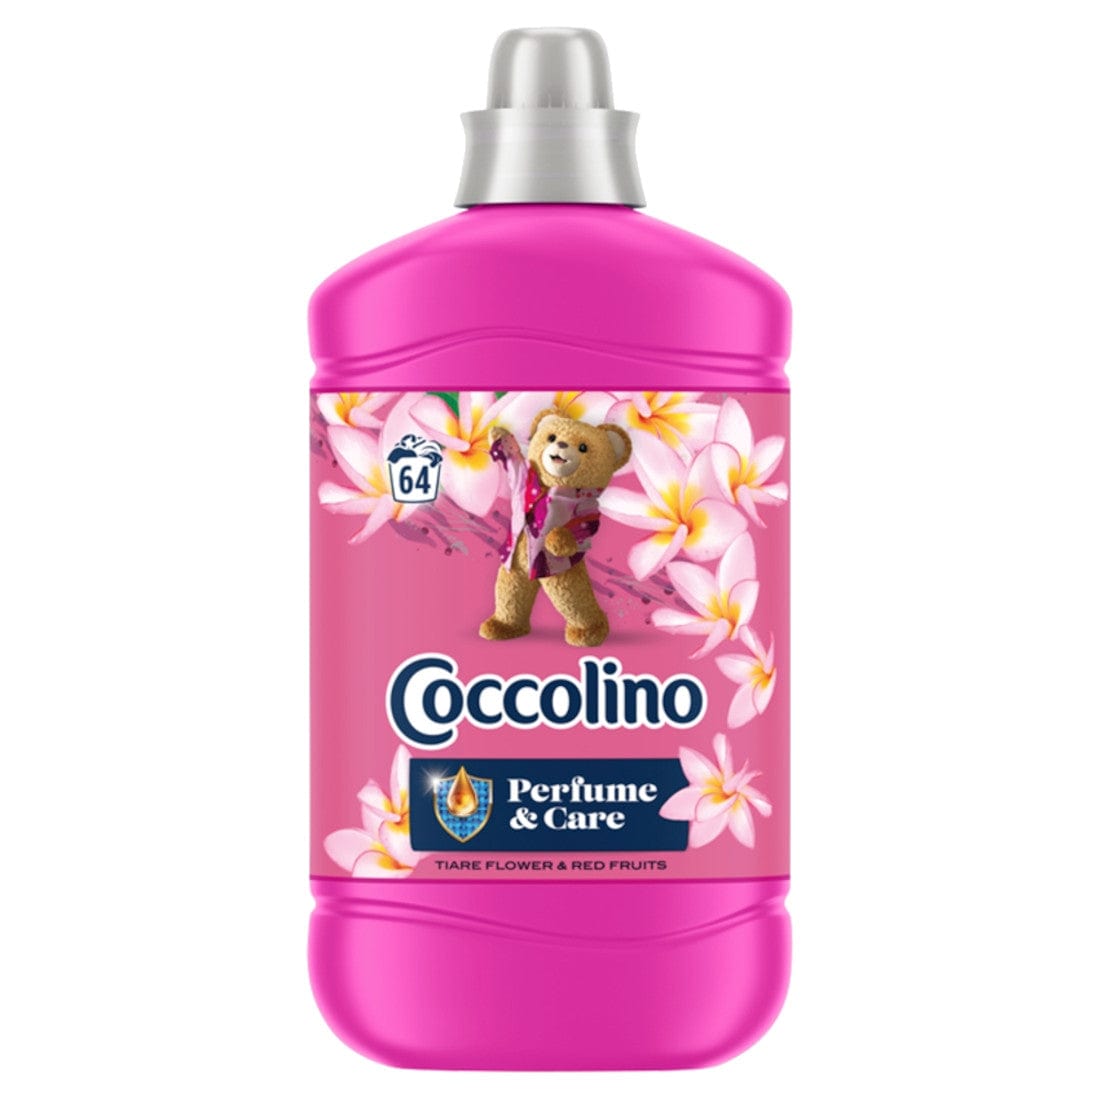 Produkt COCCOLINO Płyny do płukania Płyn do płukania COCCOLINO Tiare Flower & Red Fruits 64 prania 1,6 l S01889